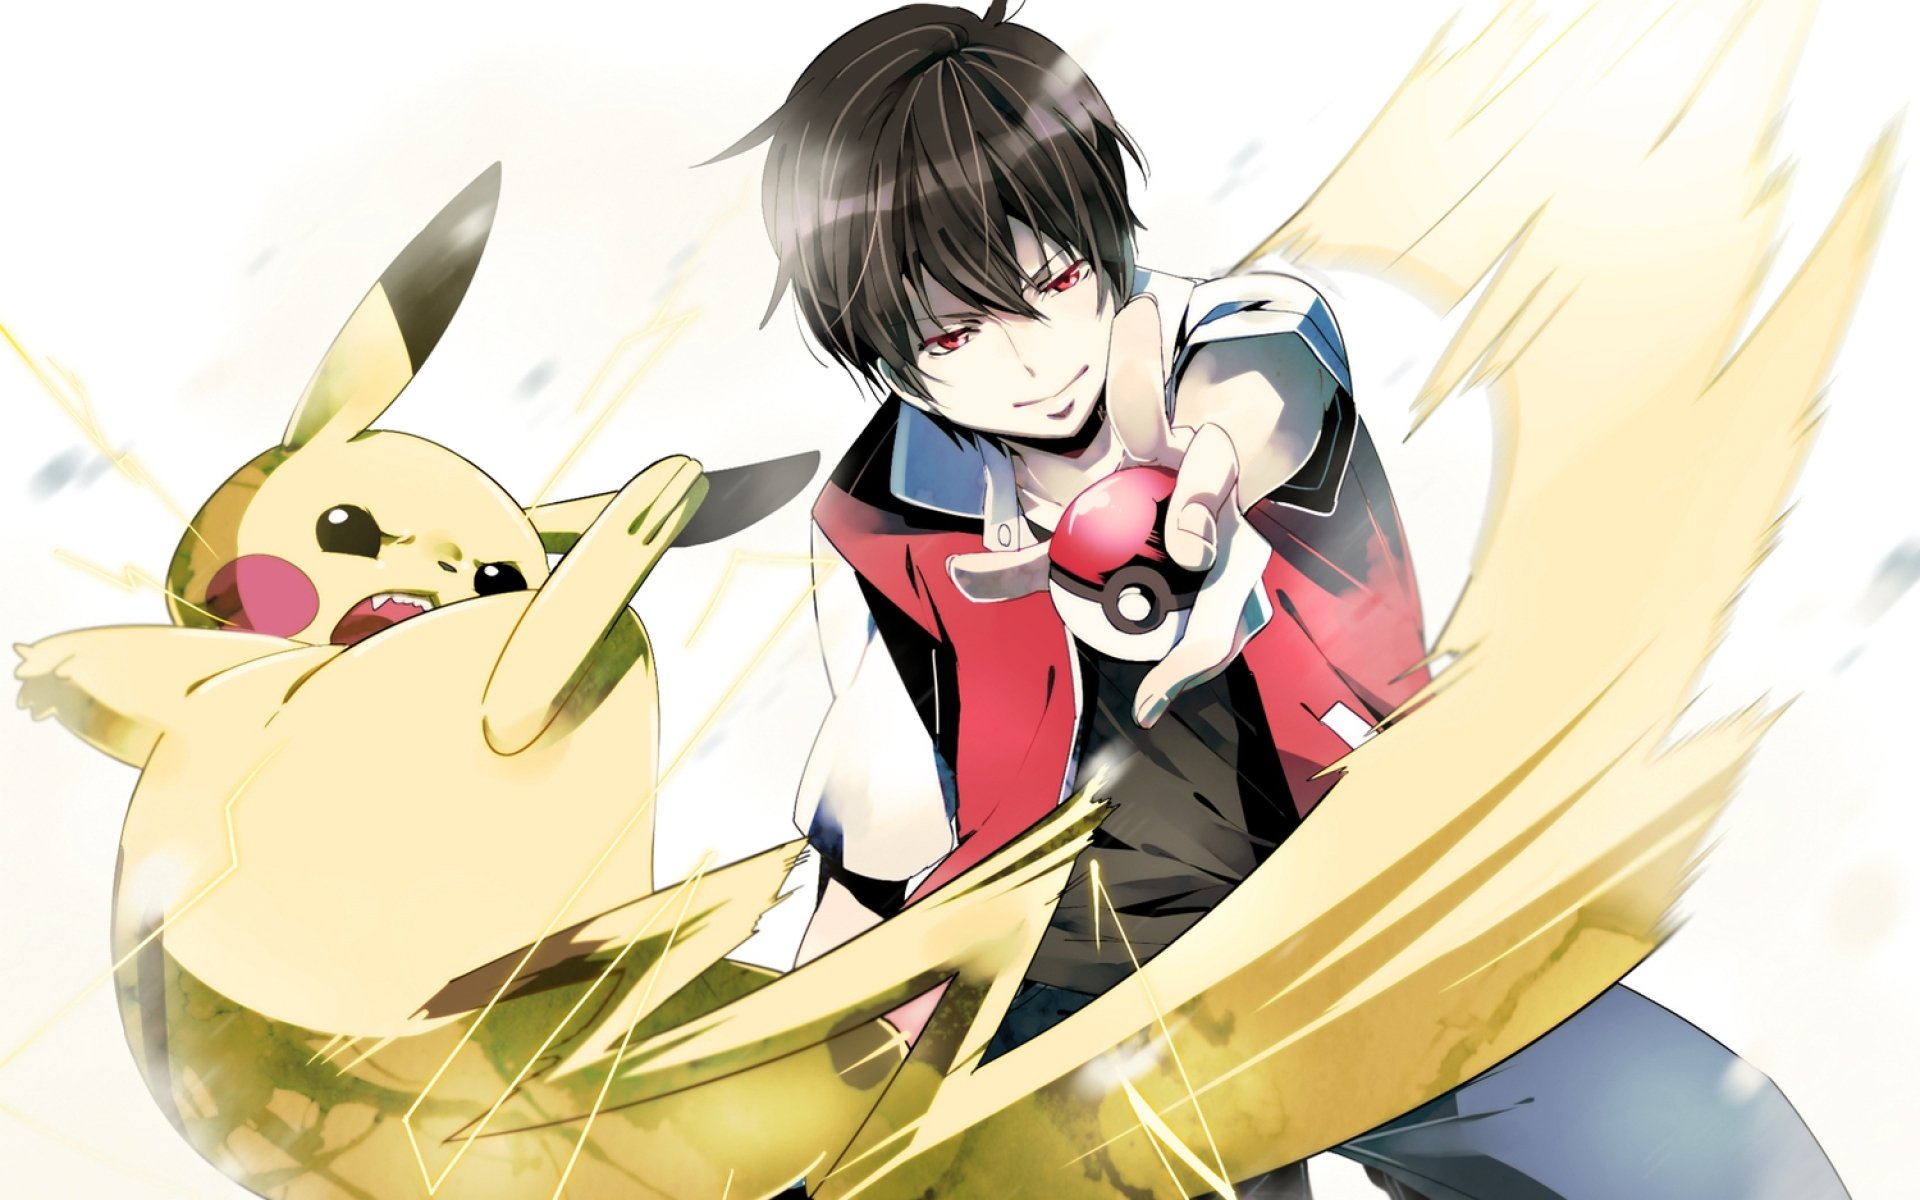 540x960 Resolution Red and Pikachu Pokémon 540x960 Resolution